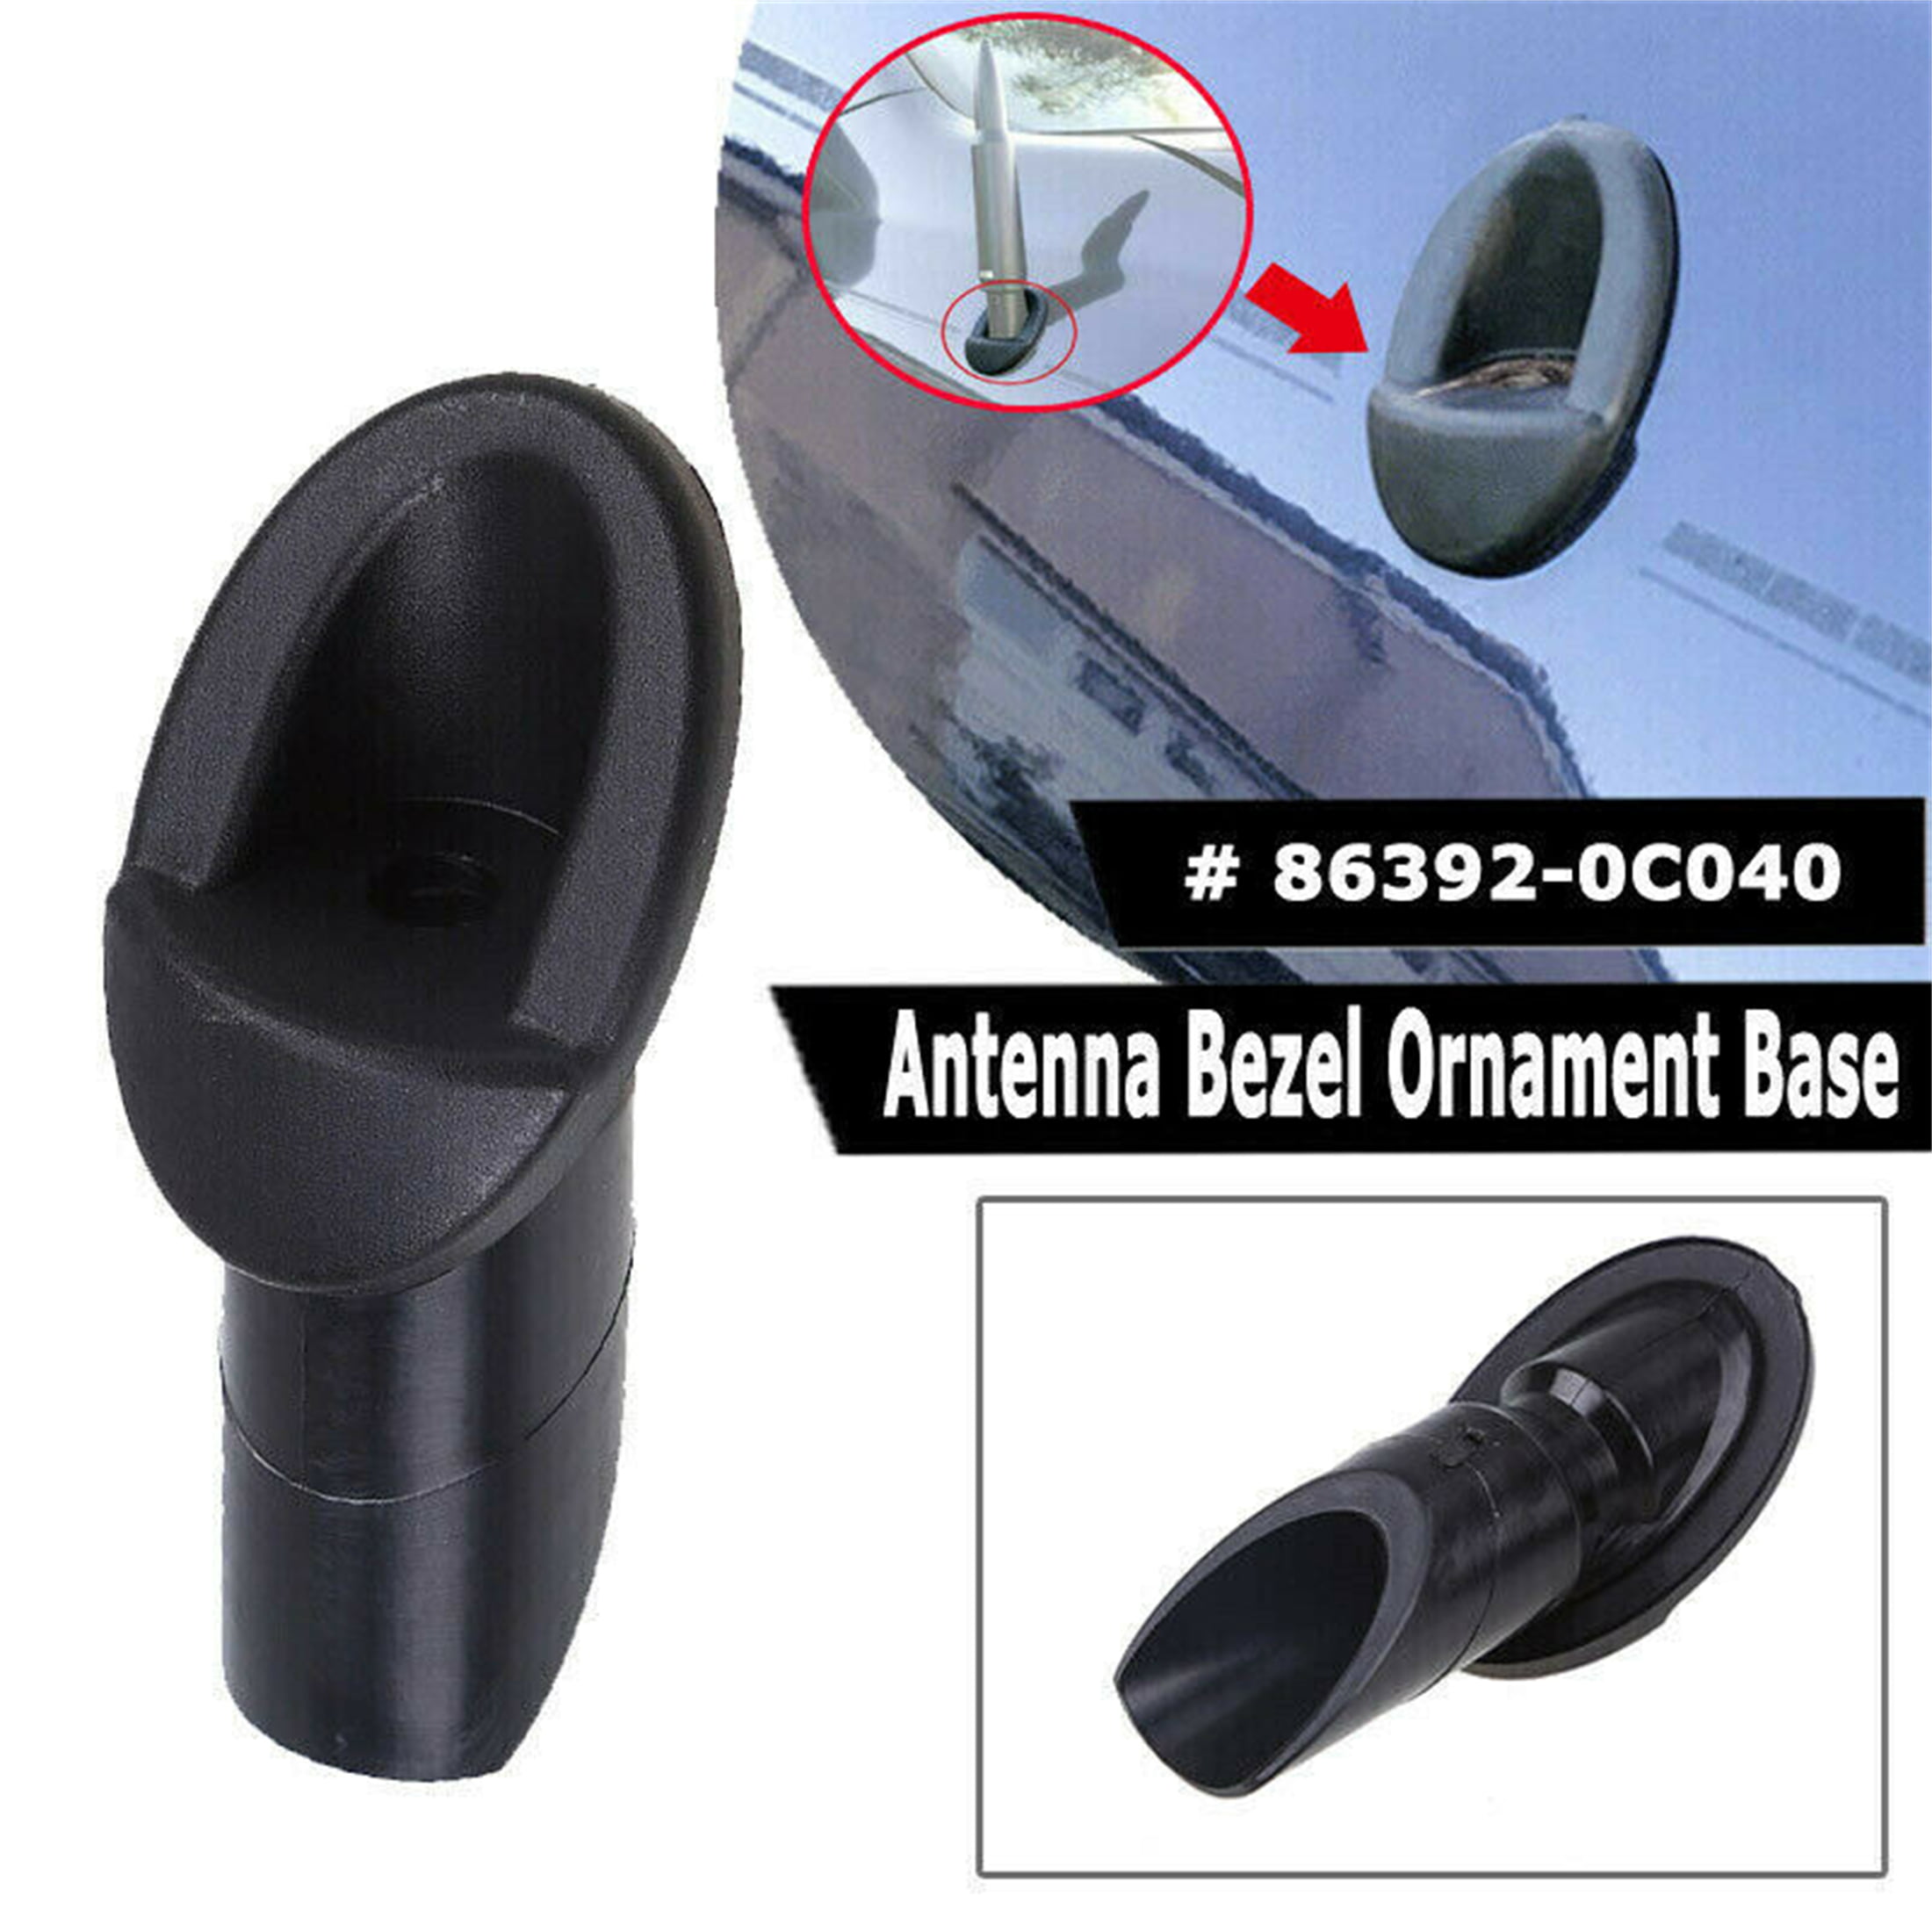 Antenna Ornament Adapter Base Bezel for 07-13 Toyota Tundra 86392-0C040 US Stock 